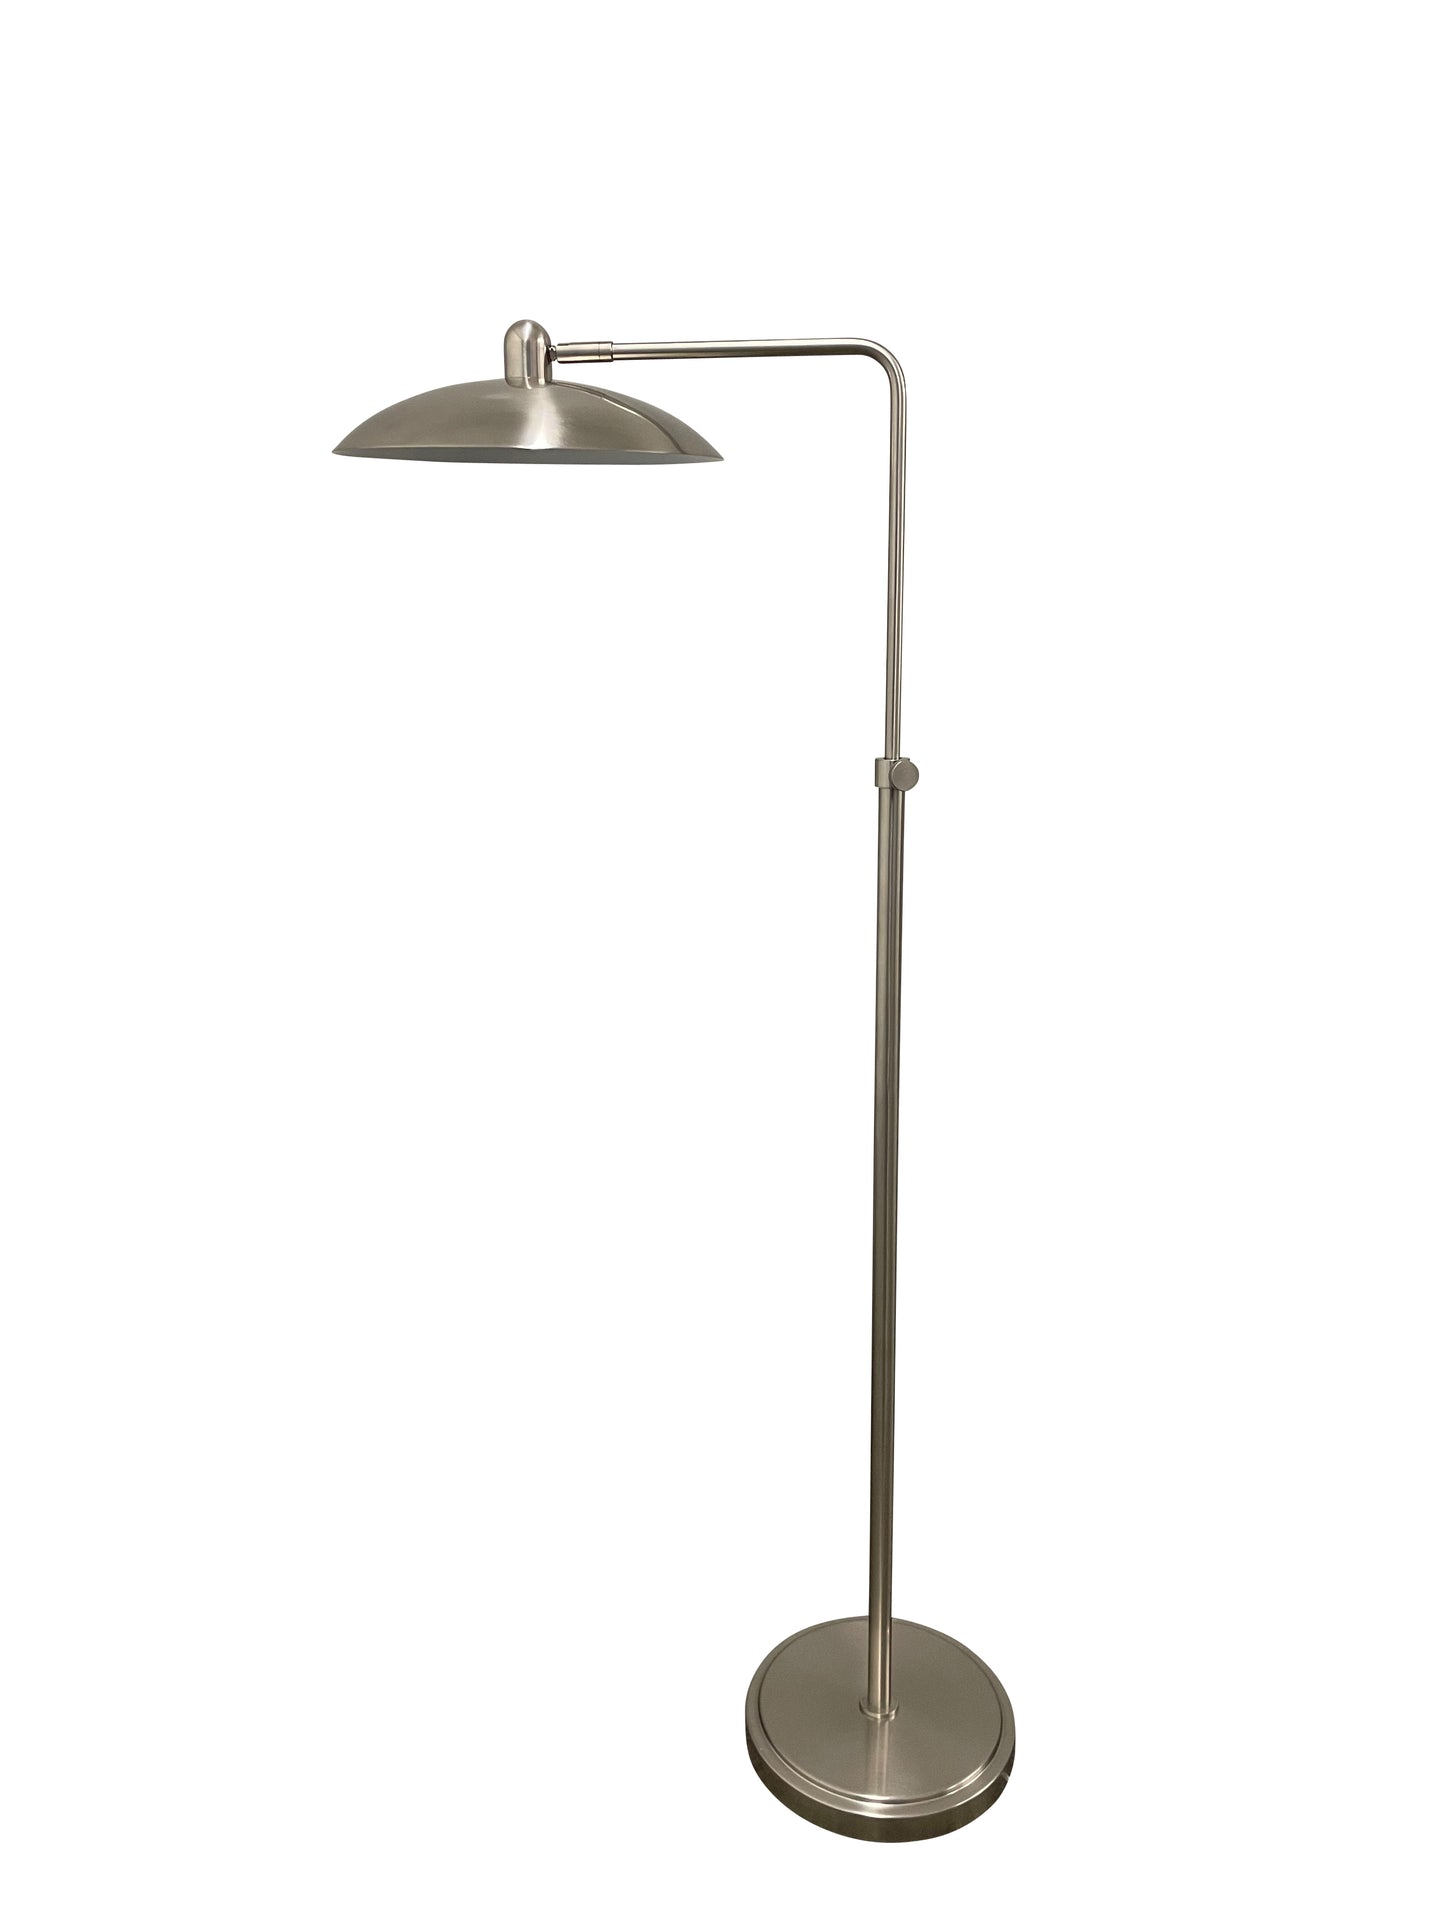 House of Troy Ridgeline satin nickel adjustable floor lamp with metal dome shaped shade RL200-SN